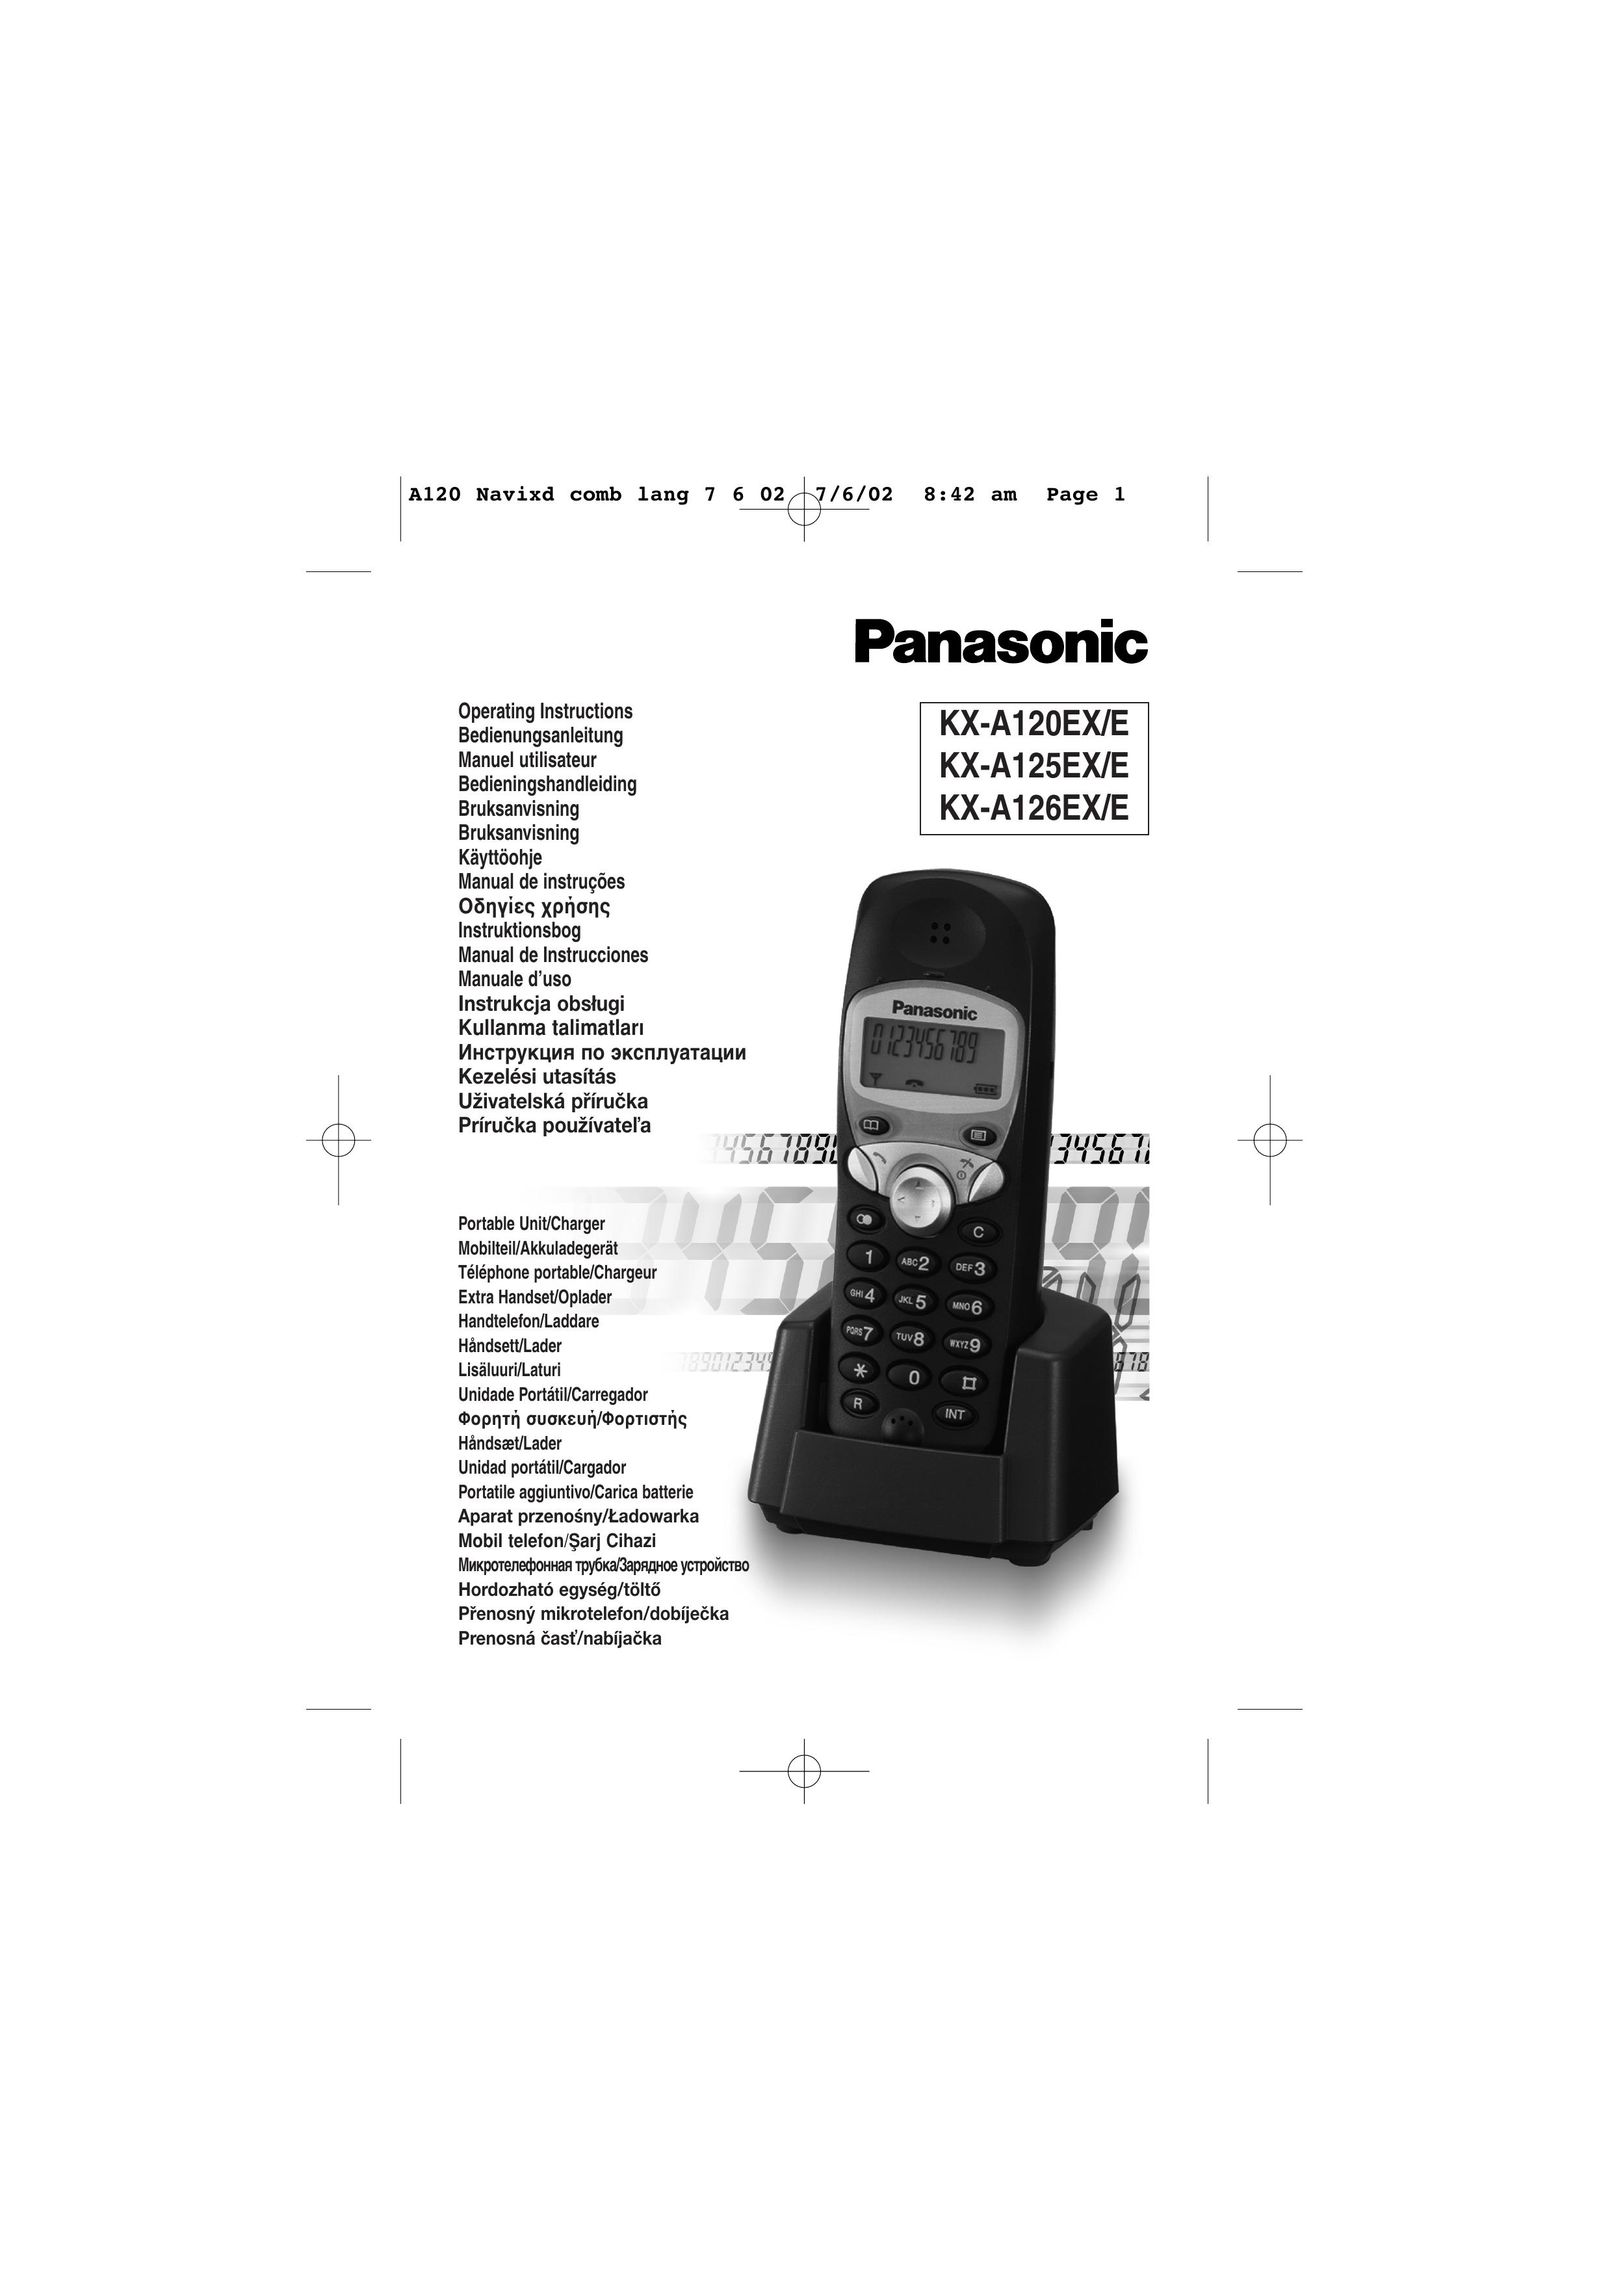 Panasonic KX-A125EX/E Telephone User Manual